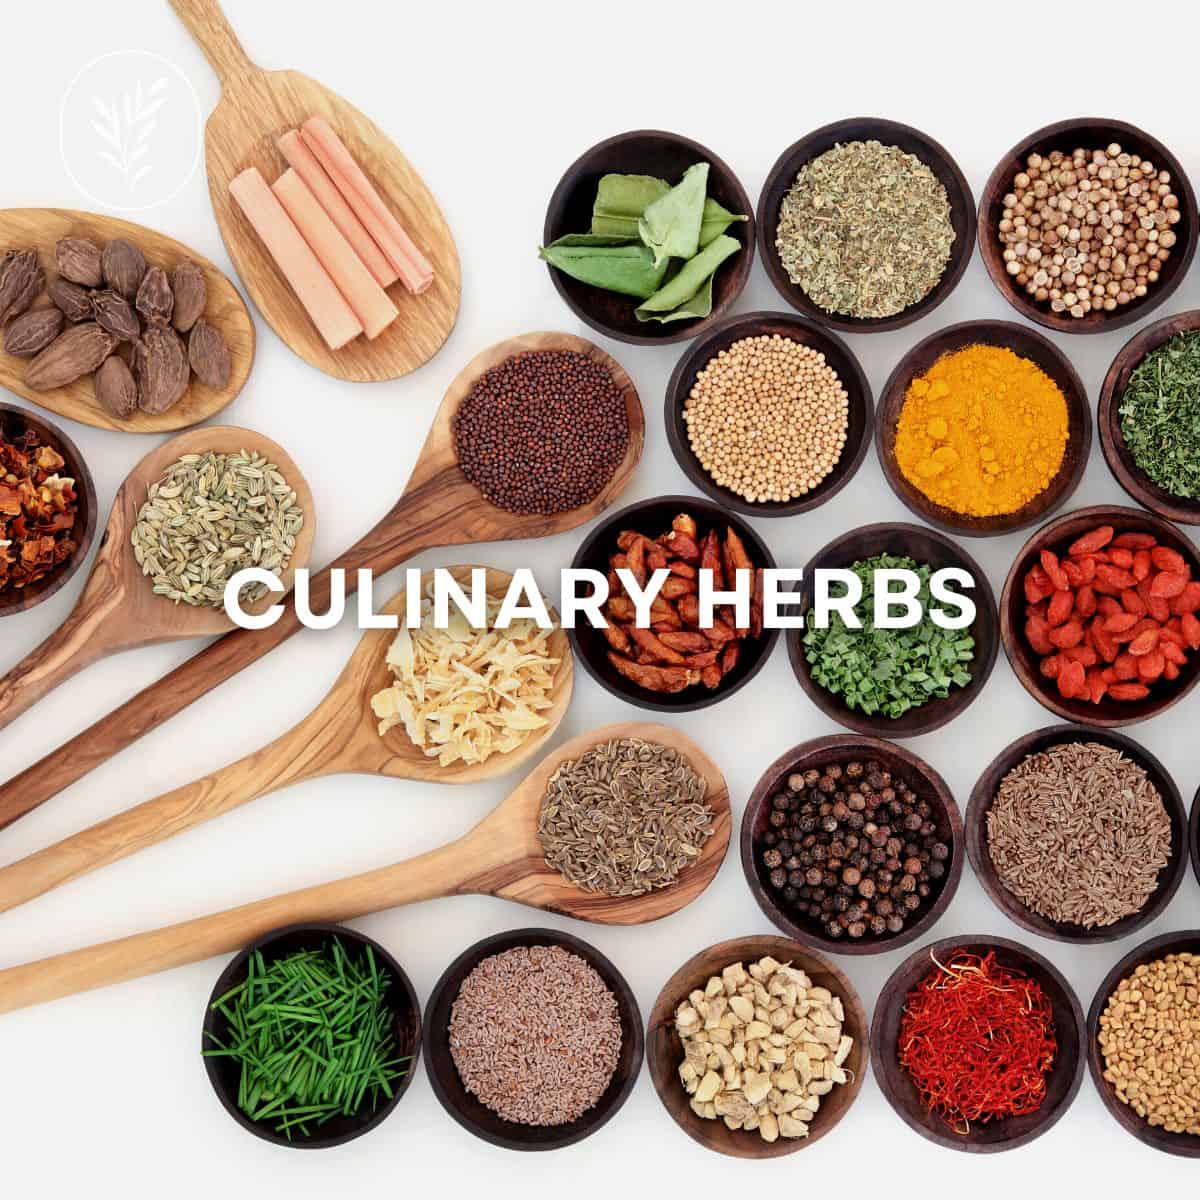 Culinary herbs via @home4theharvest